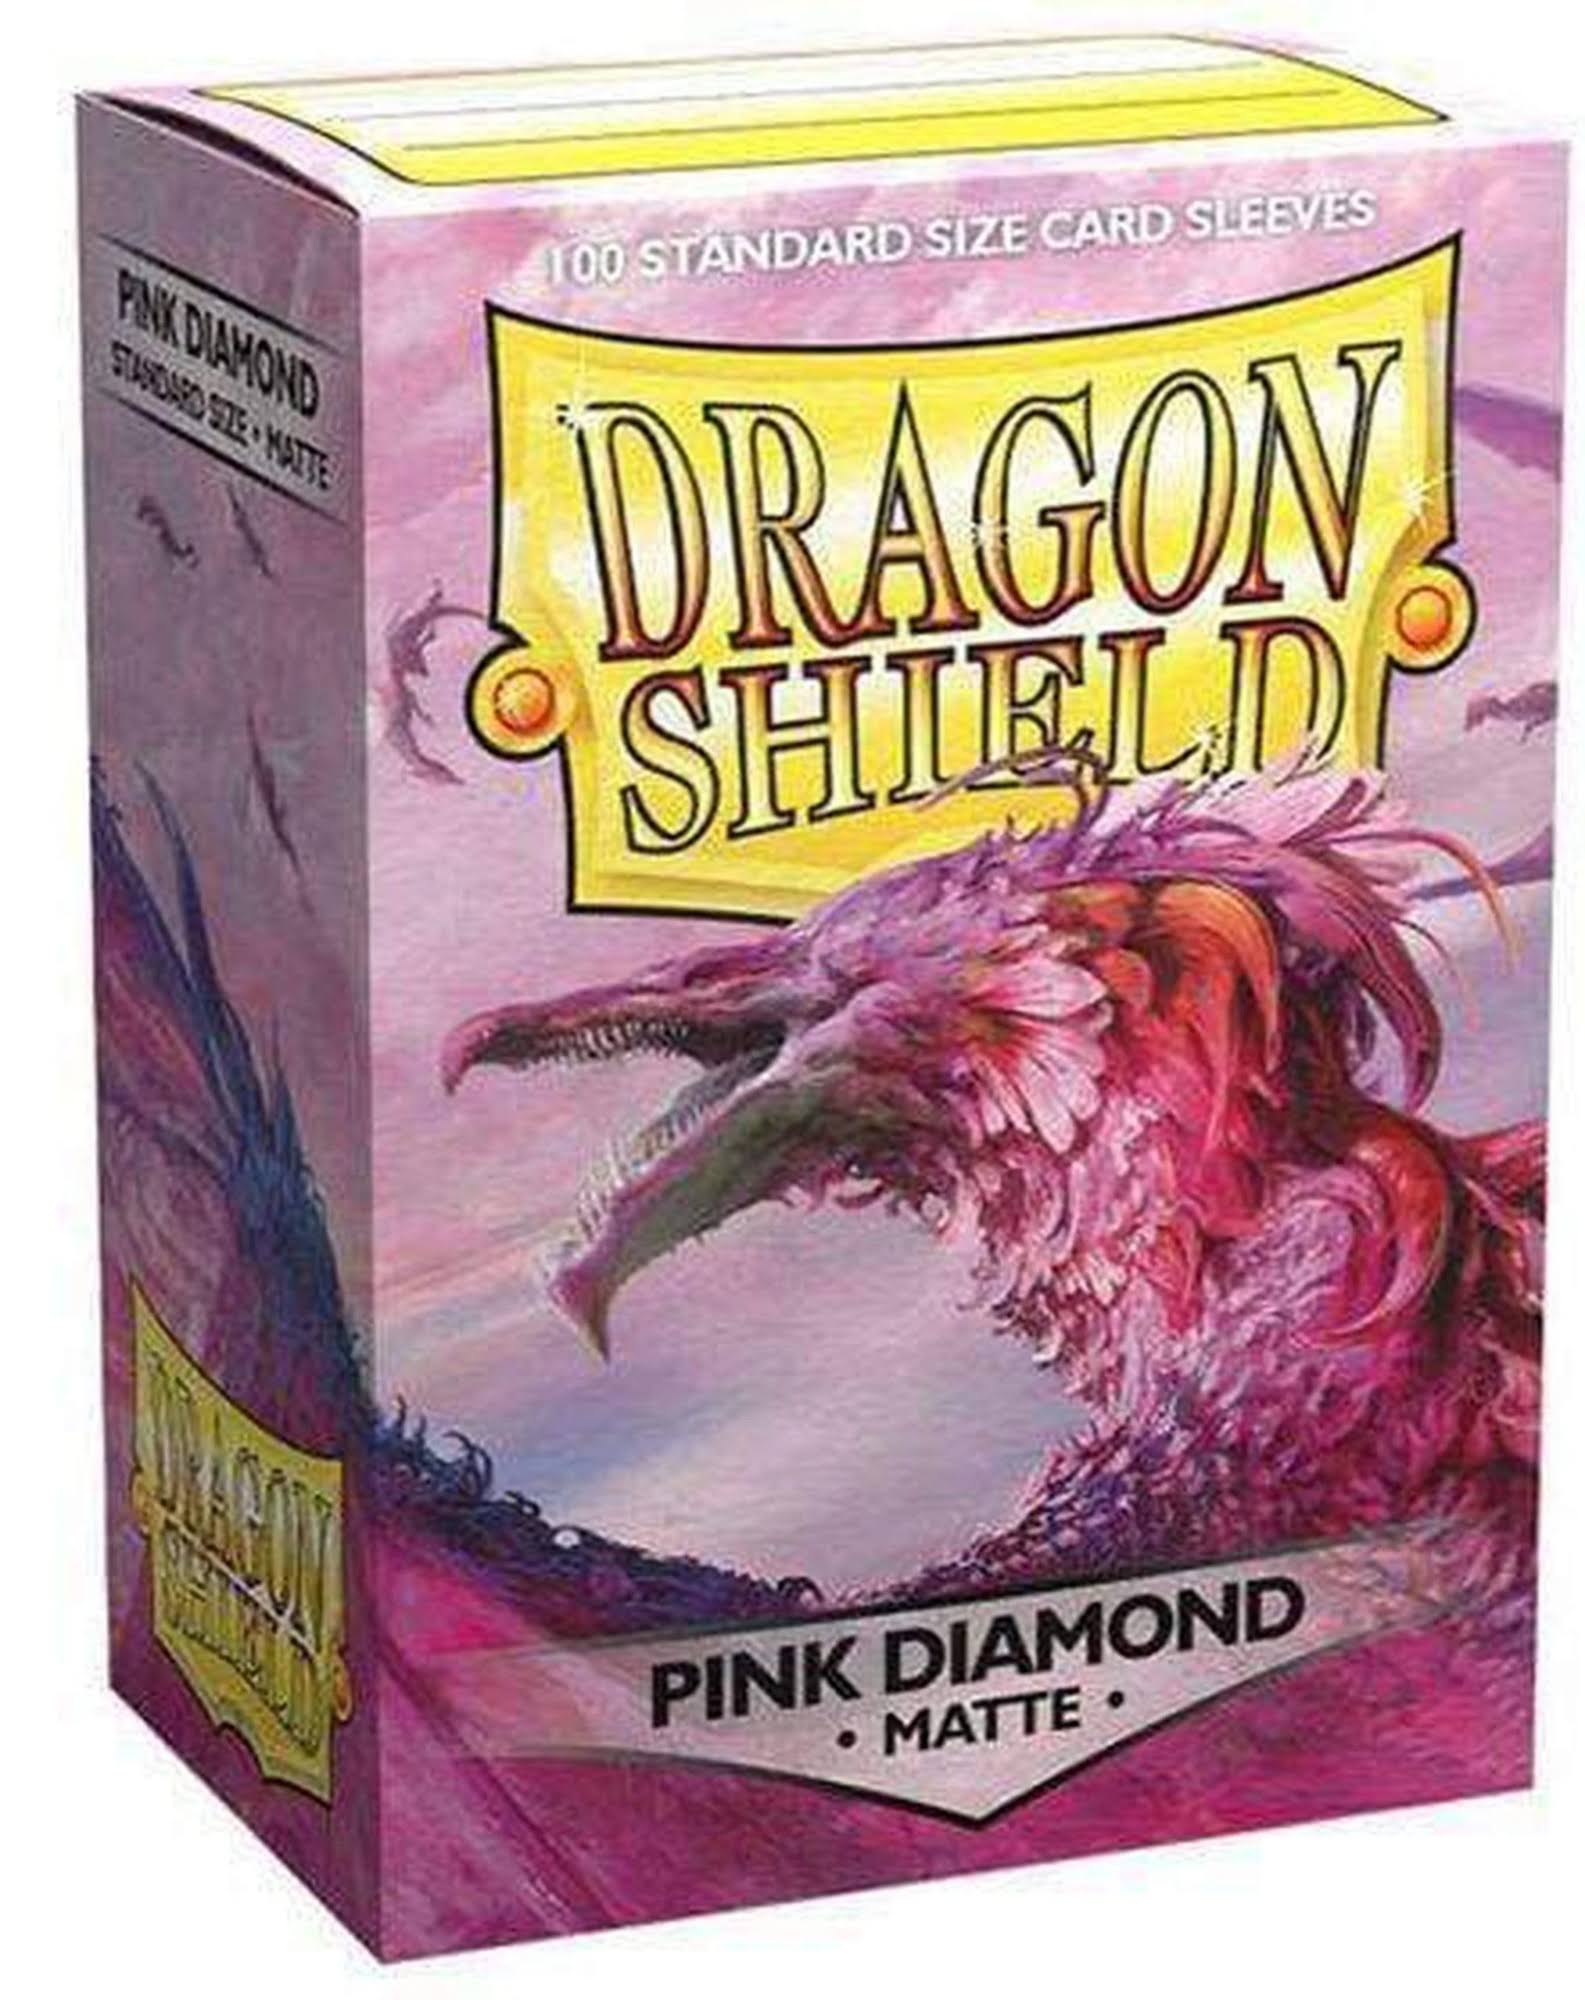 DRAGON SHIELD - Sleeves - Matte Pink Diamond (100)